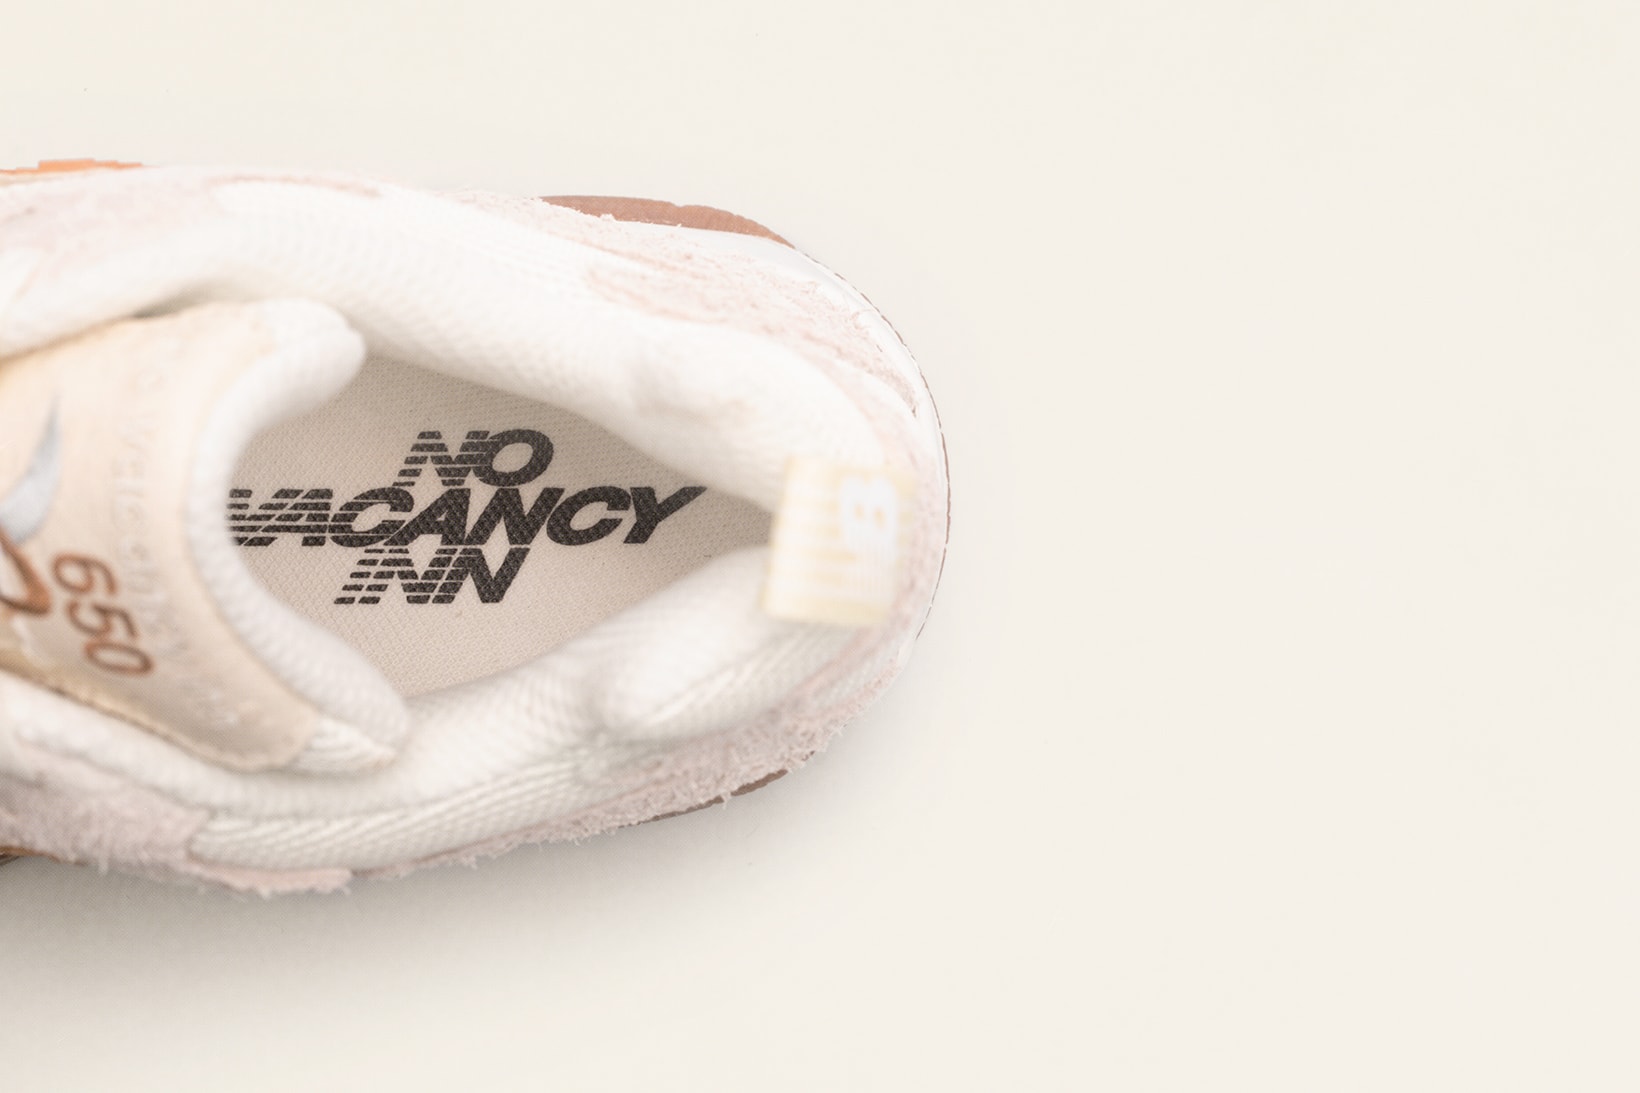 No Vacancy Inn New Balance 650 Sneakers Collaboration